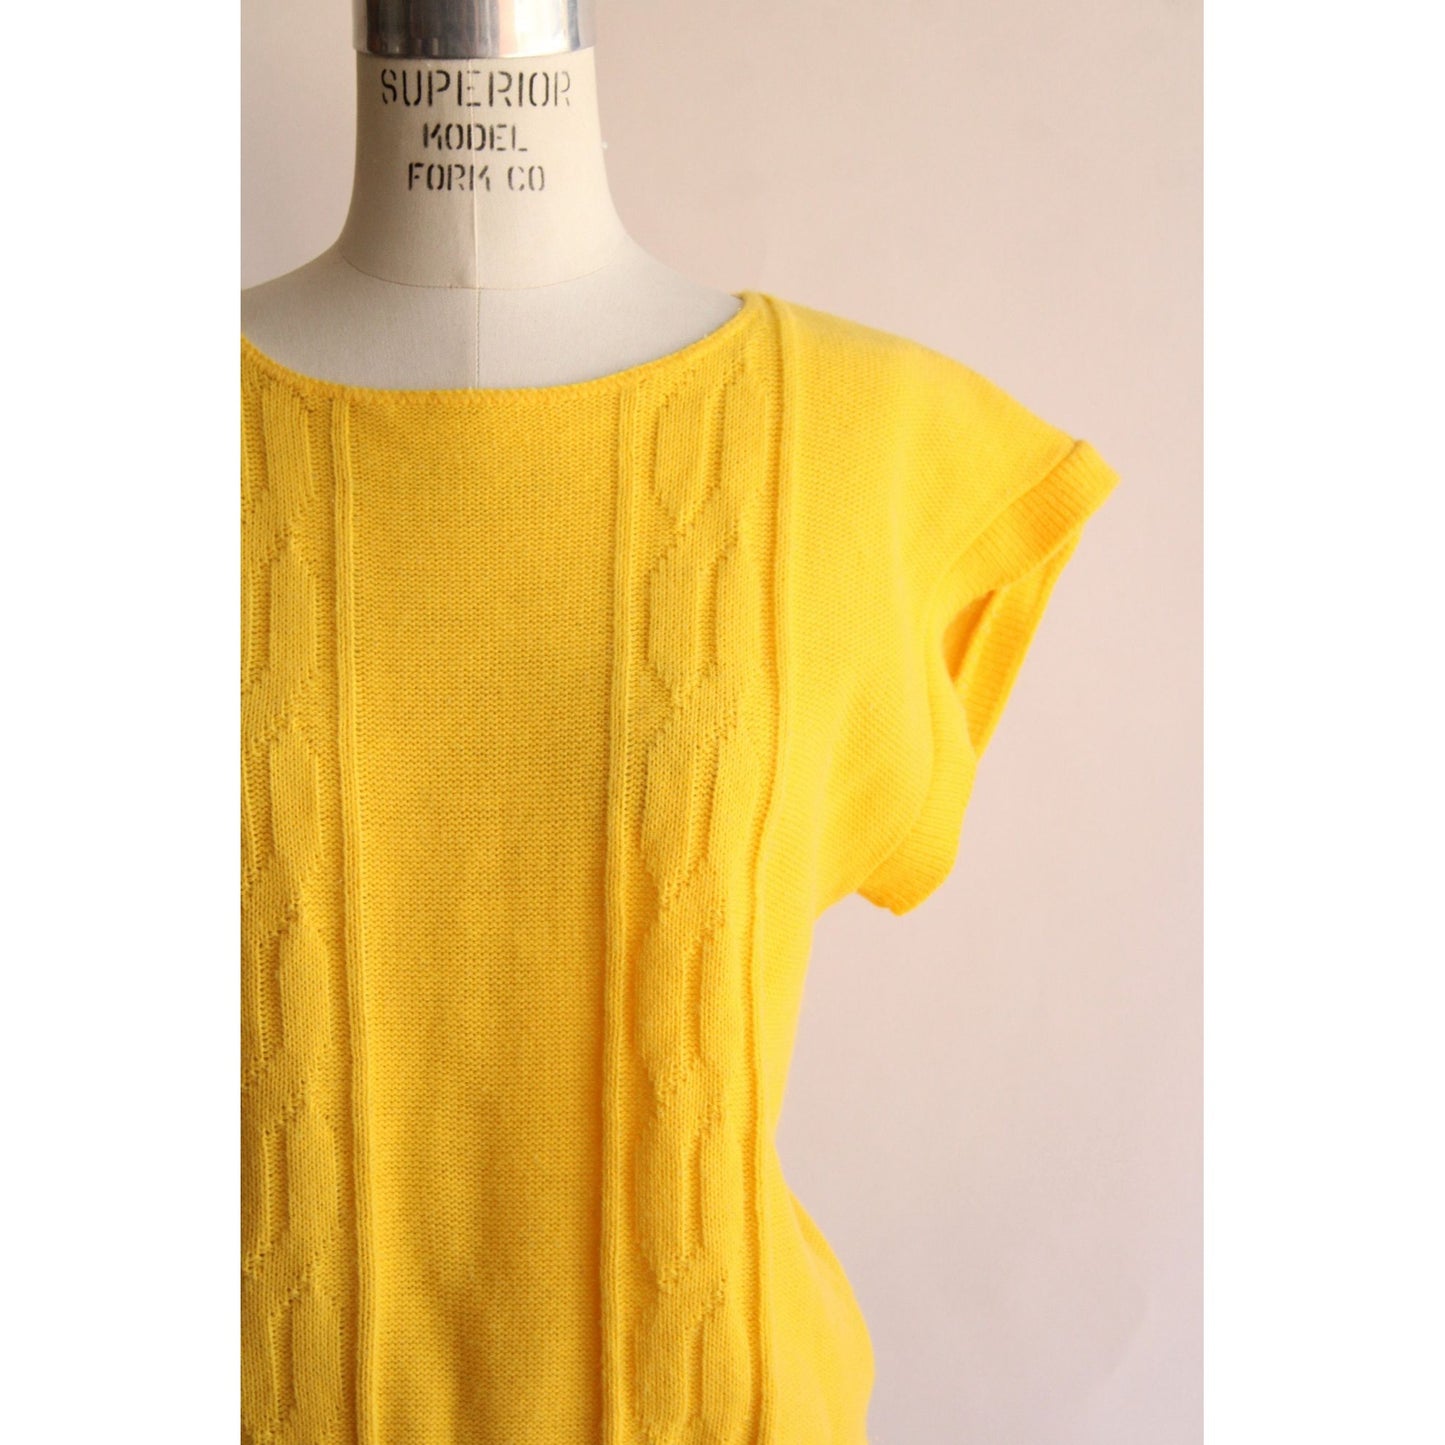 Vintage 1980s Yellow Cap Sleeve Sweater